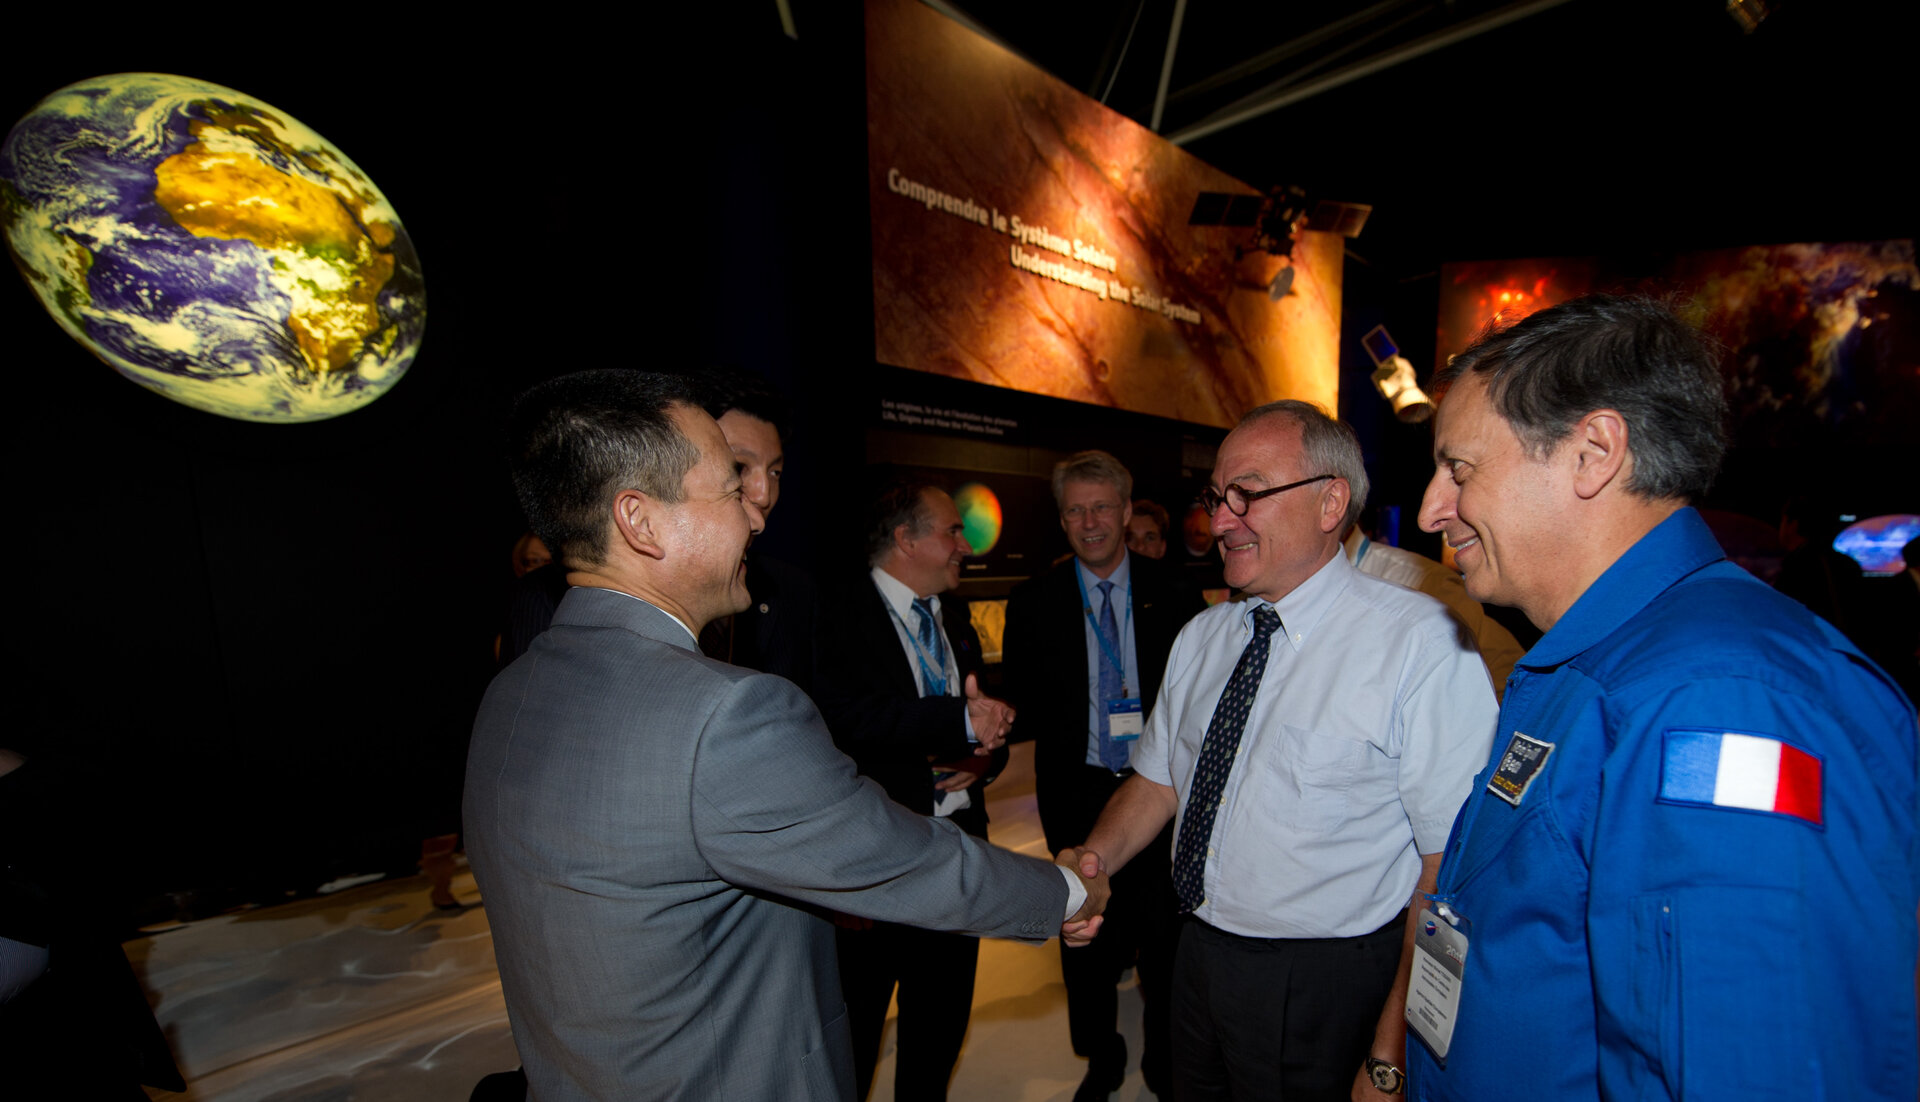 Jean-Jacques Dordain welcomes "Taikonaut" Zhai Zhigang to the ESA pavilion